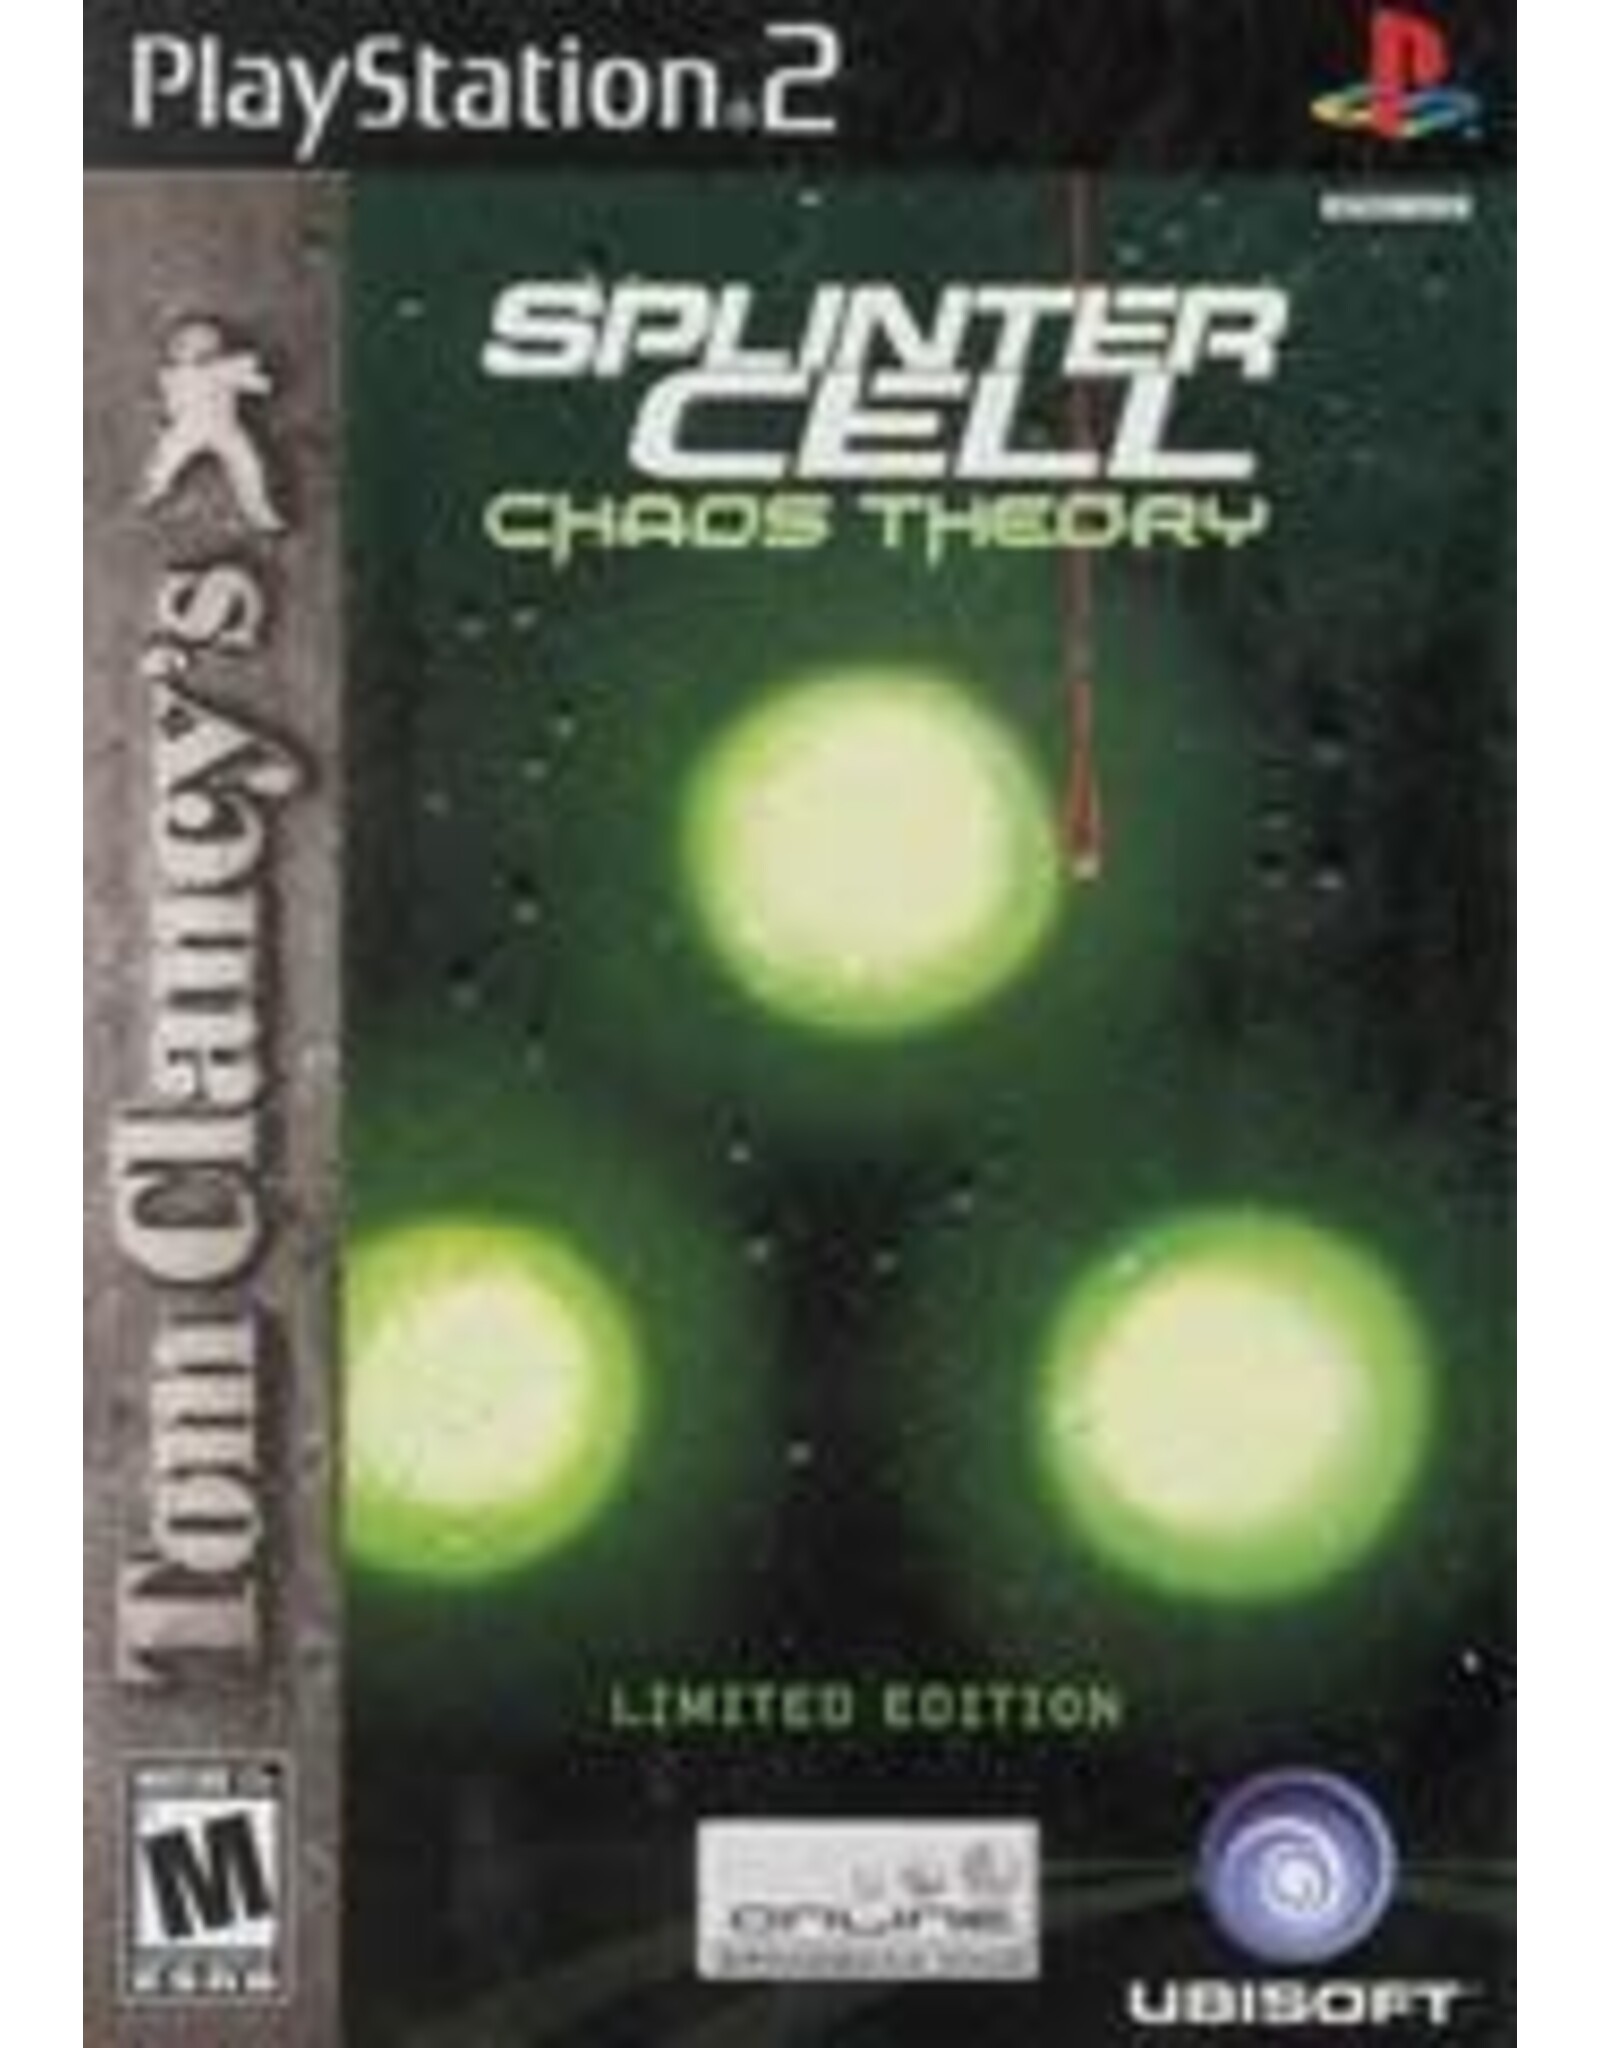 Playstation 2 Splinter Cell Chaos Theory Limited Edition (CiB)